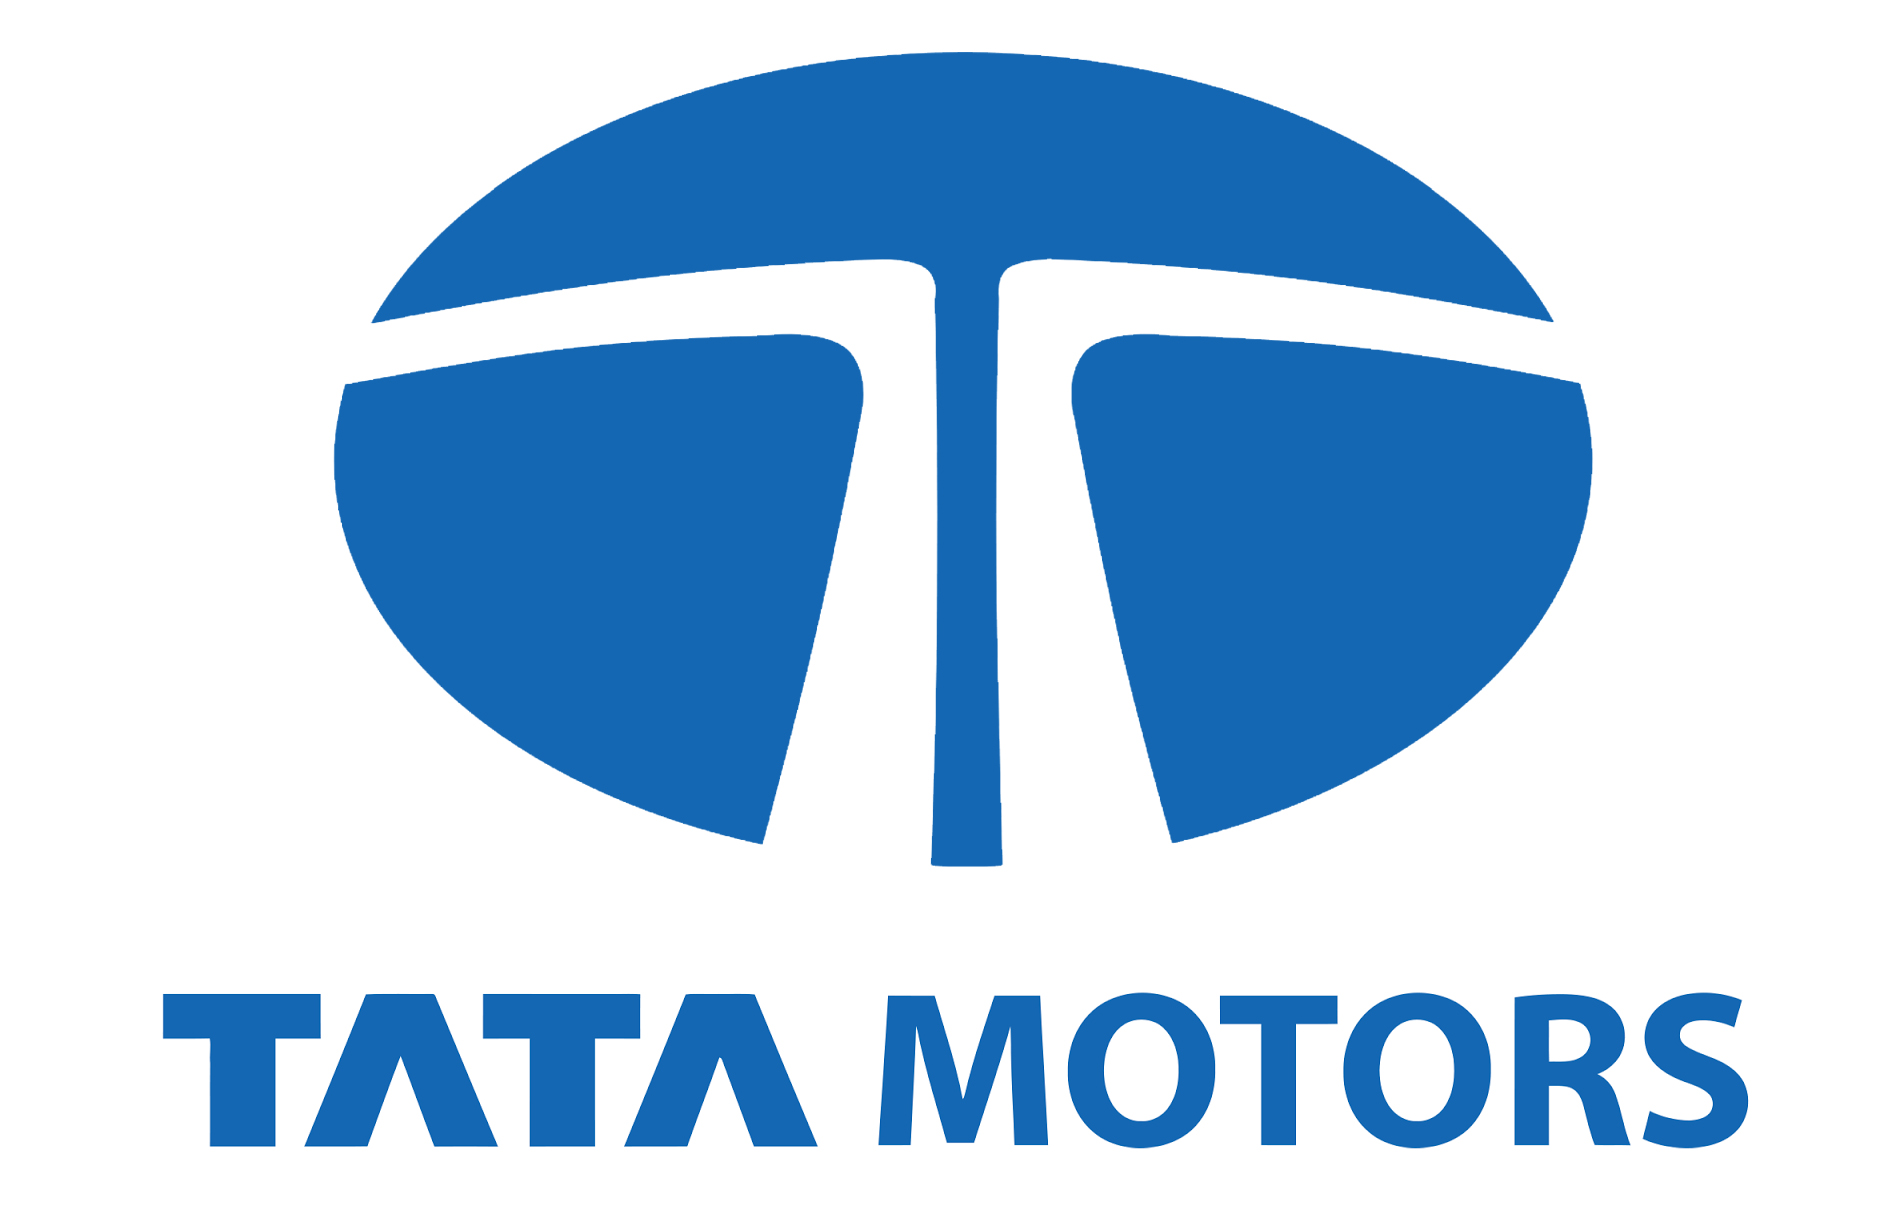 Tata Motors Cars Showroom - Tirupati|Show Room|Automotive